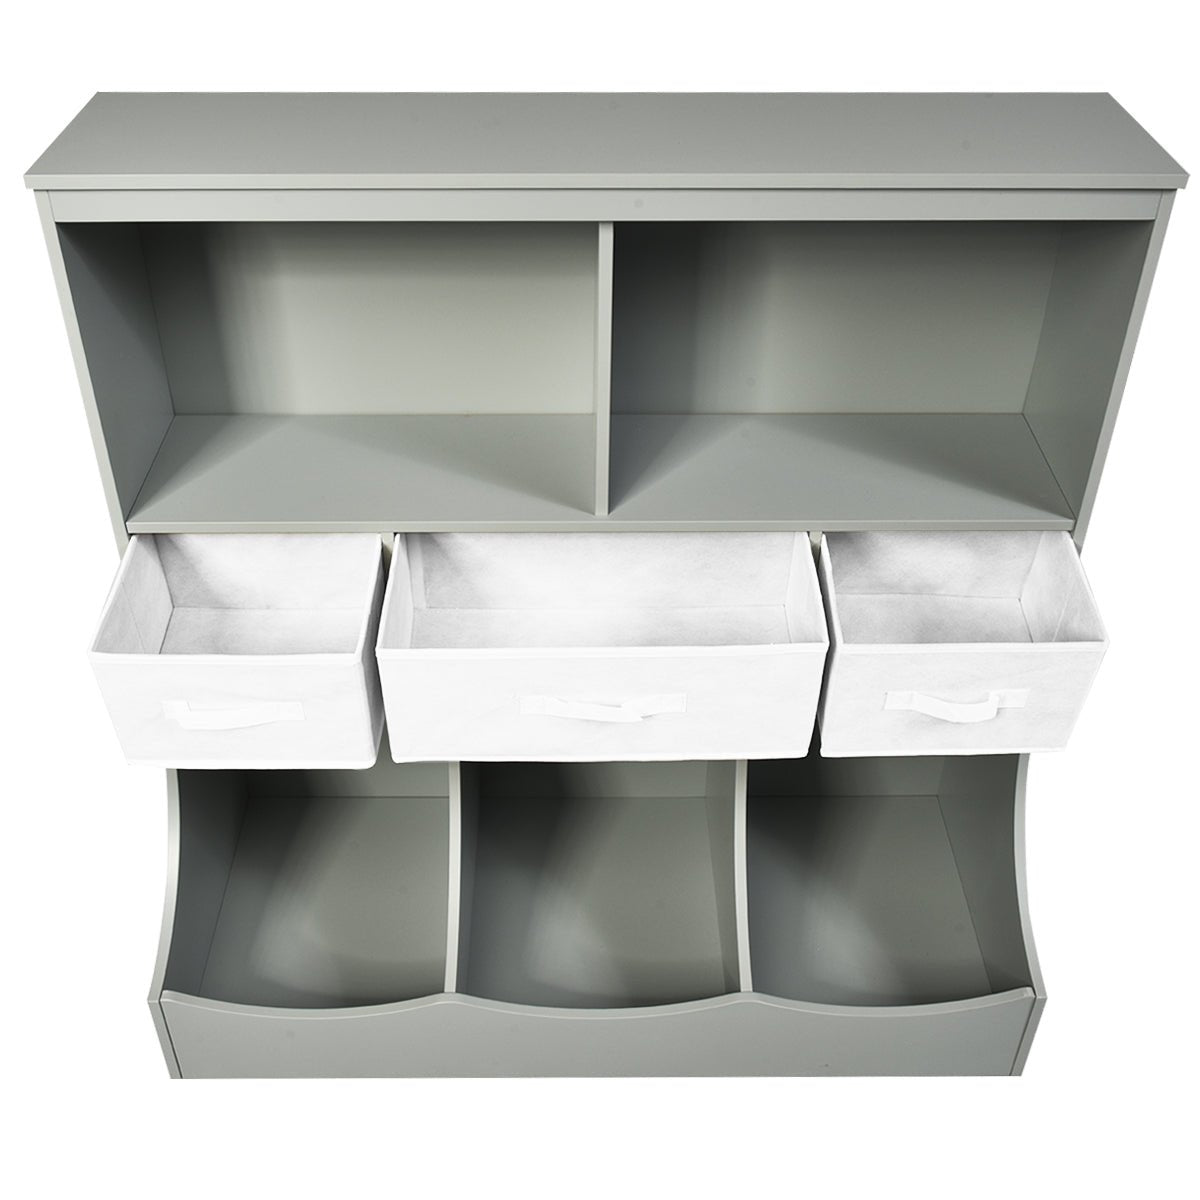 3-Layer Cubby Bin Combo - Grey & White Storage Organizer for Kids Room